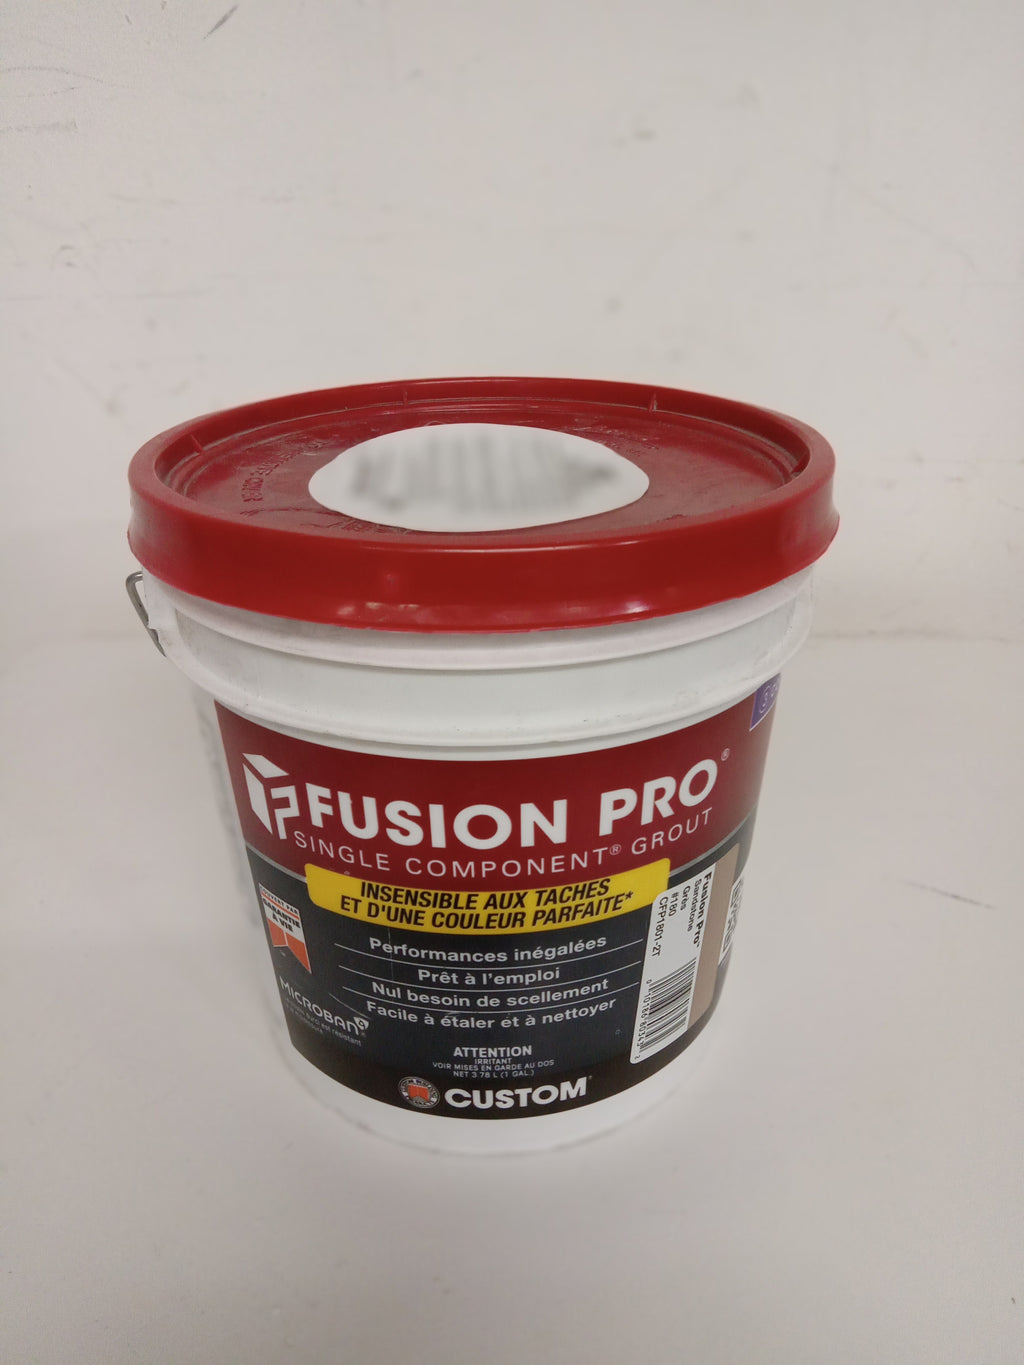 Fusion Pro Single Component Grout